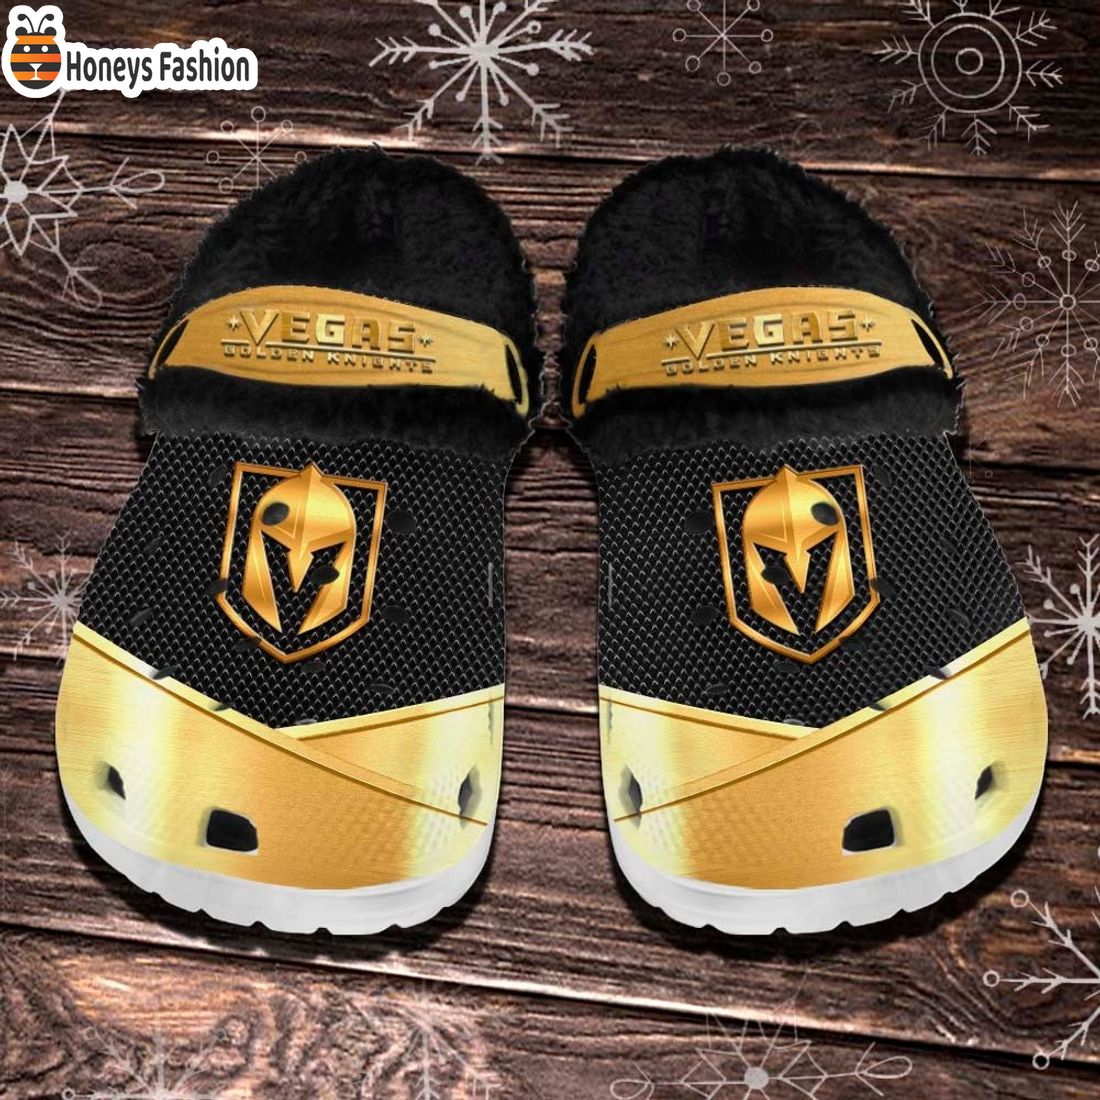 Vegas Golden Knights NHL Fleece Crocs Clogs Shoes